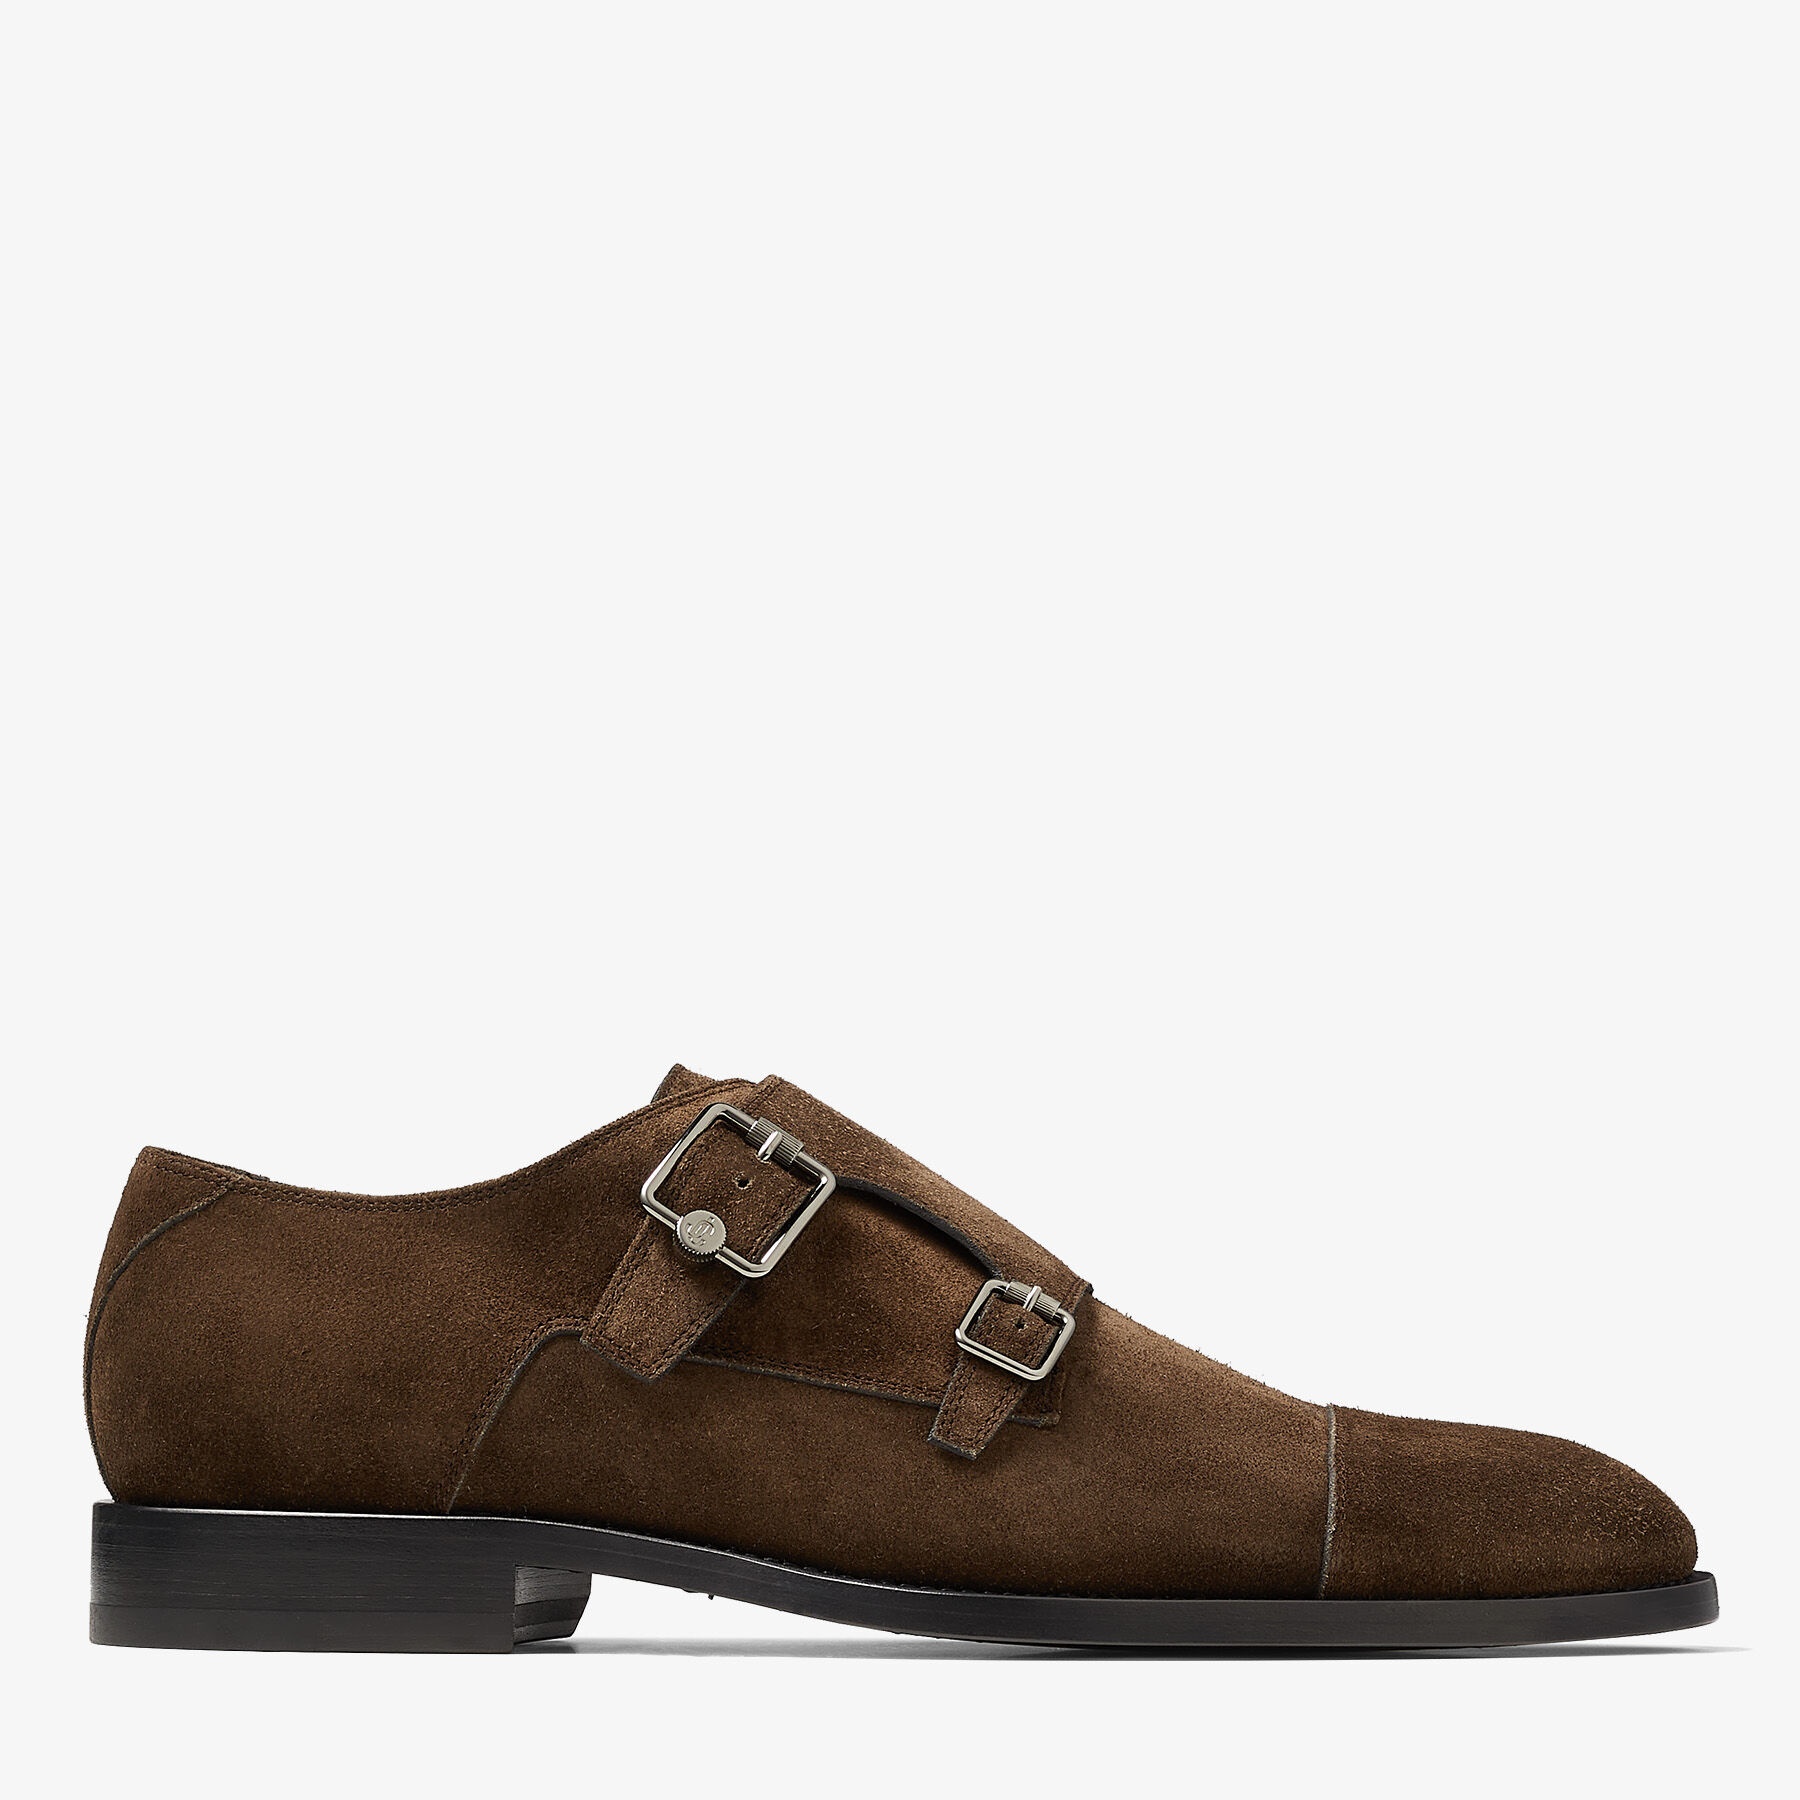 Finnion Monkstrap
Umber Velvet Suede Monk Strap Shoes - 1